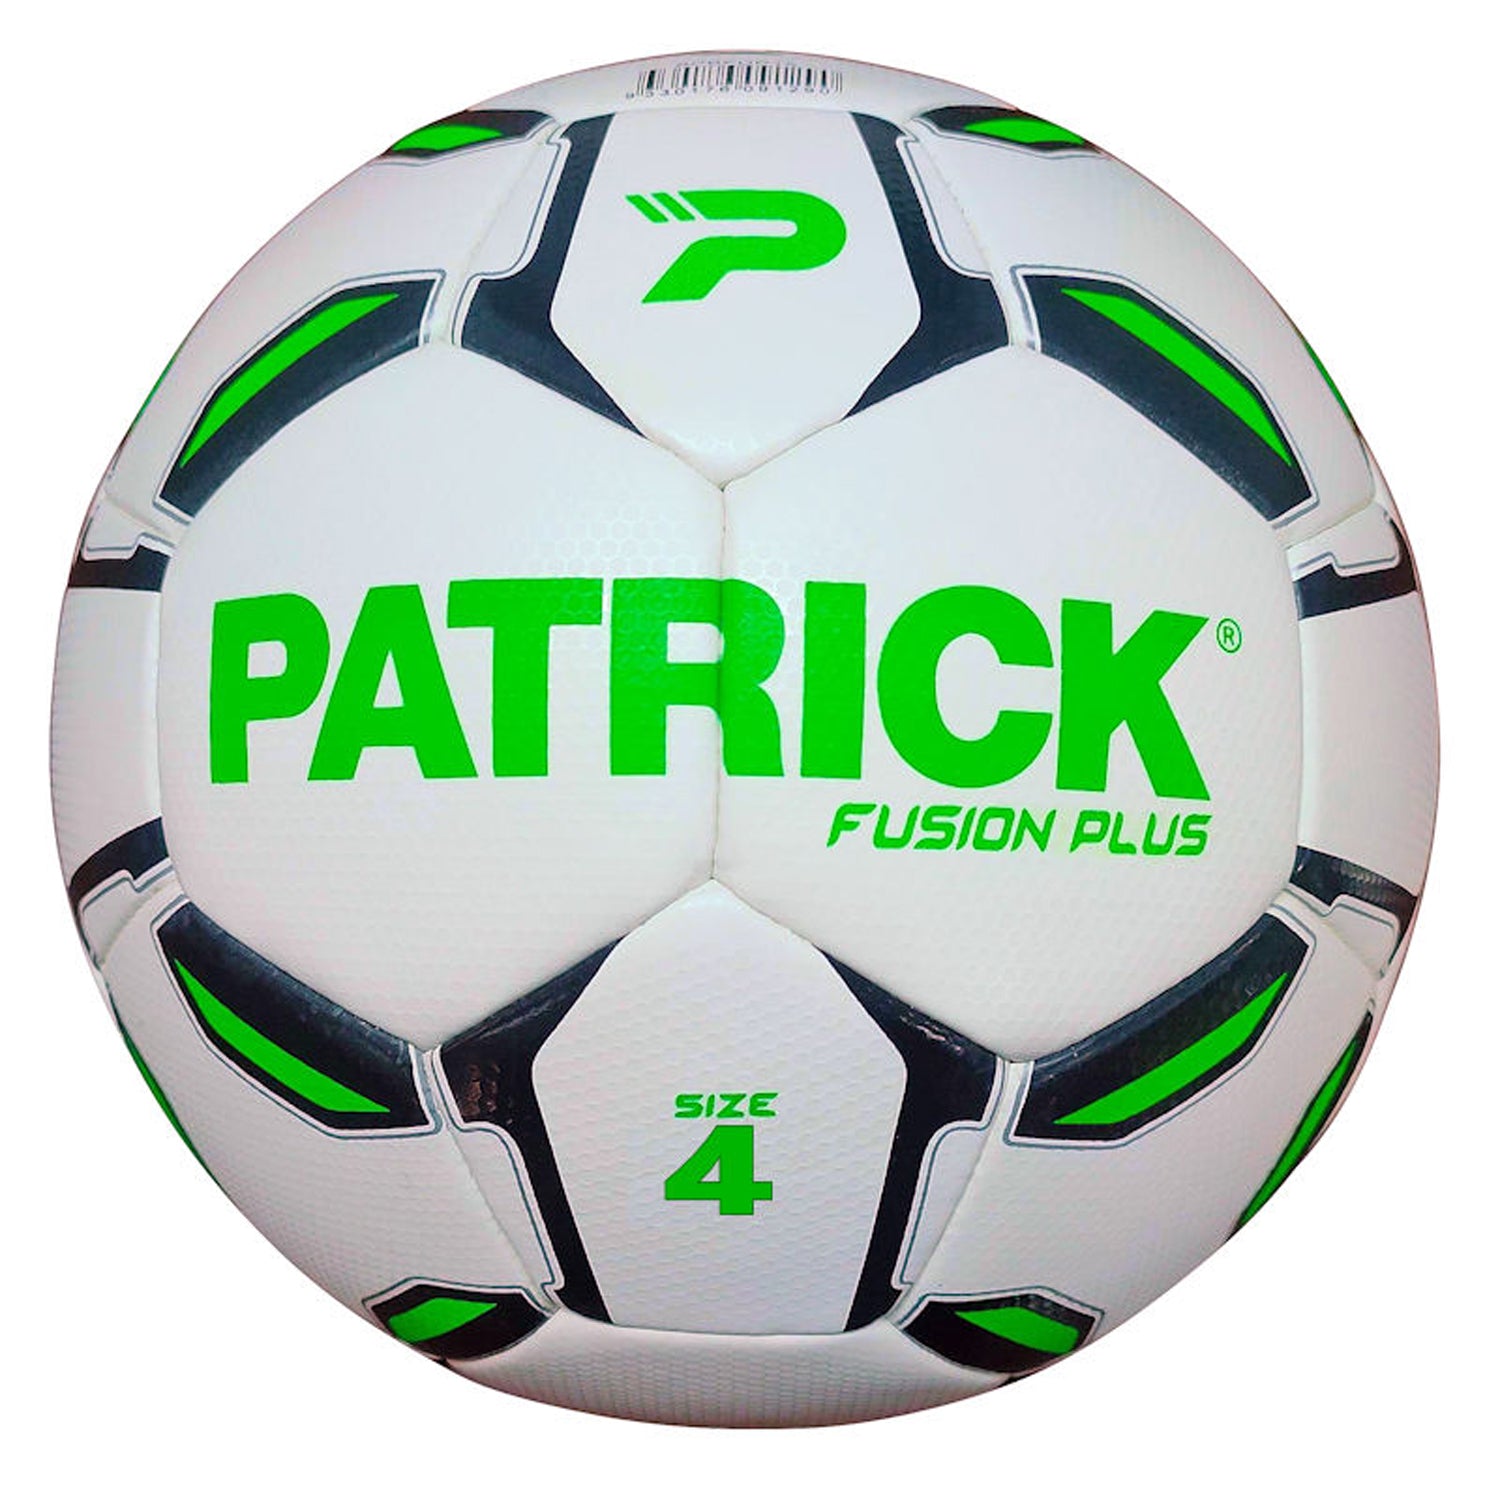 Patrick Fusion Plus Football, Size 4 (Black/Lime/Silver) - Best Price online Prokicksports.com